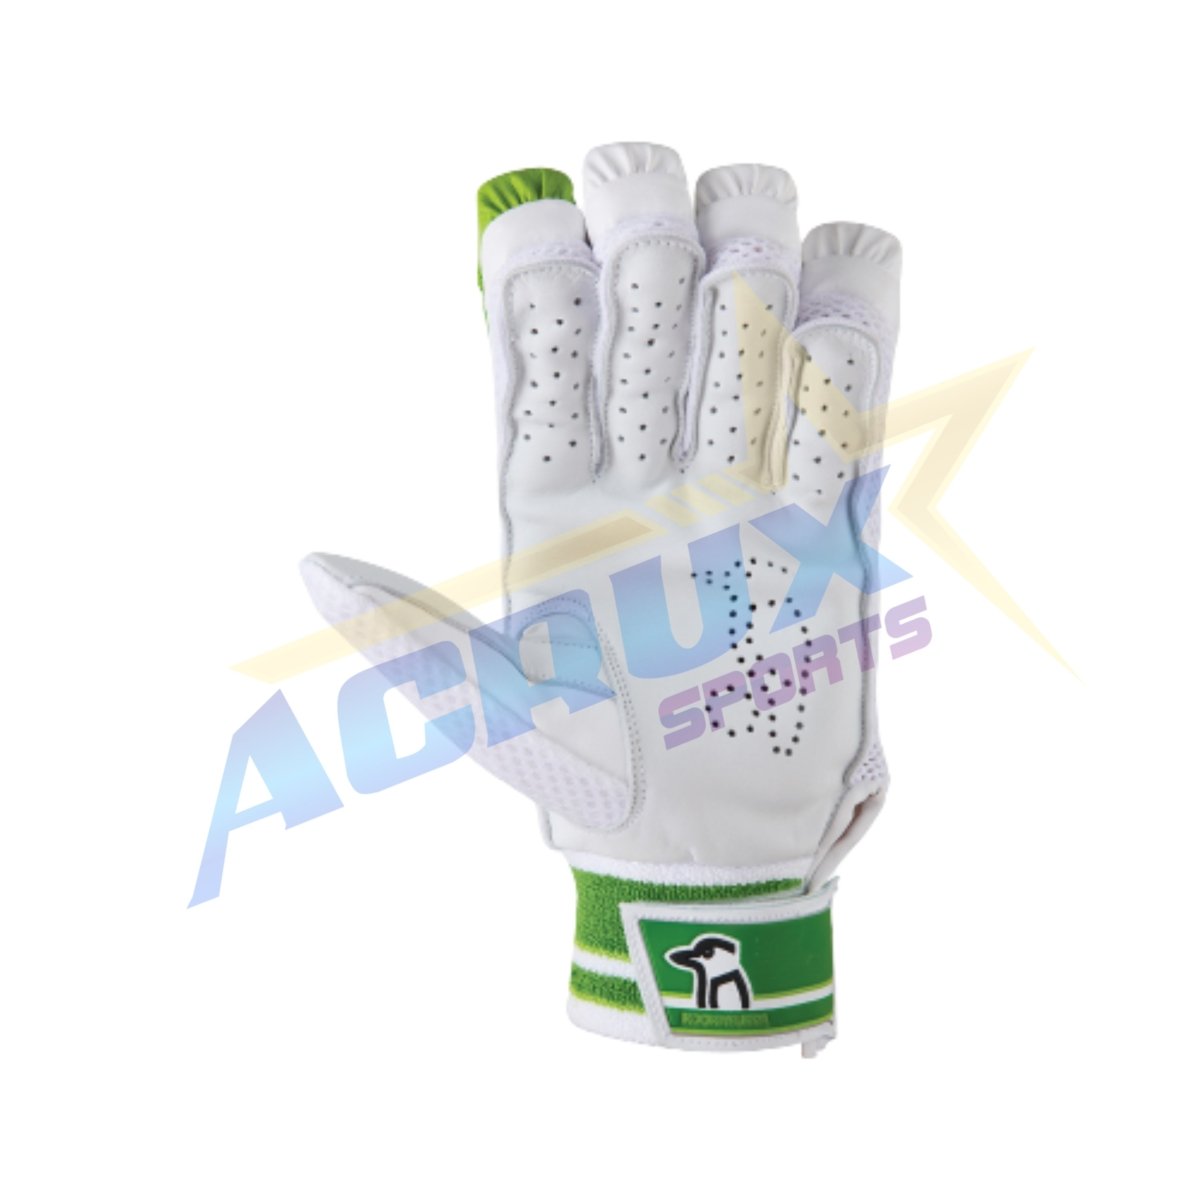 Kookaburra Kahuna Pro 5.0 Cricket Batting Gloves.